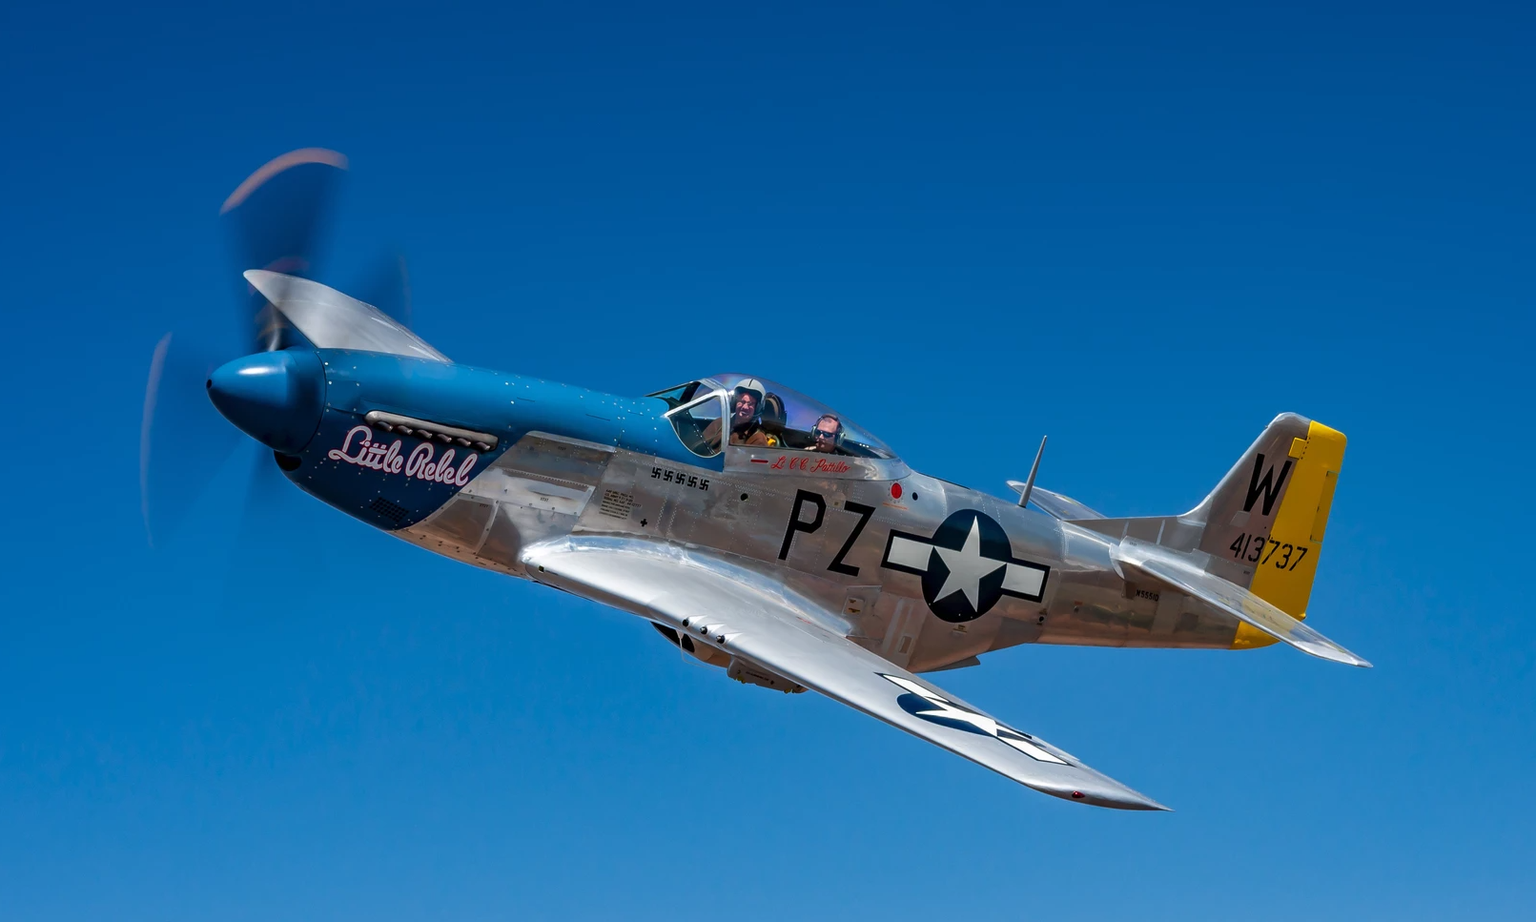 1945 North American Aviation P-51D &quot;Little Rebel&quot;
flugzeug zweiter weltkrieg https://www.platinumfighters.com/inventory-2/1945-north-american-aviation-p-51d-%22little-rebel%22